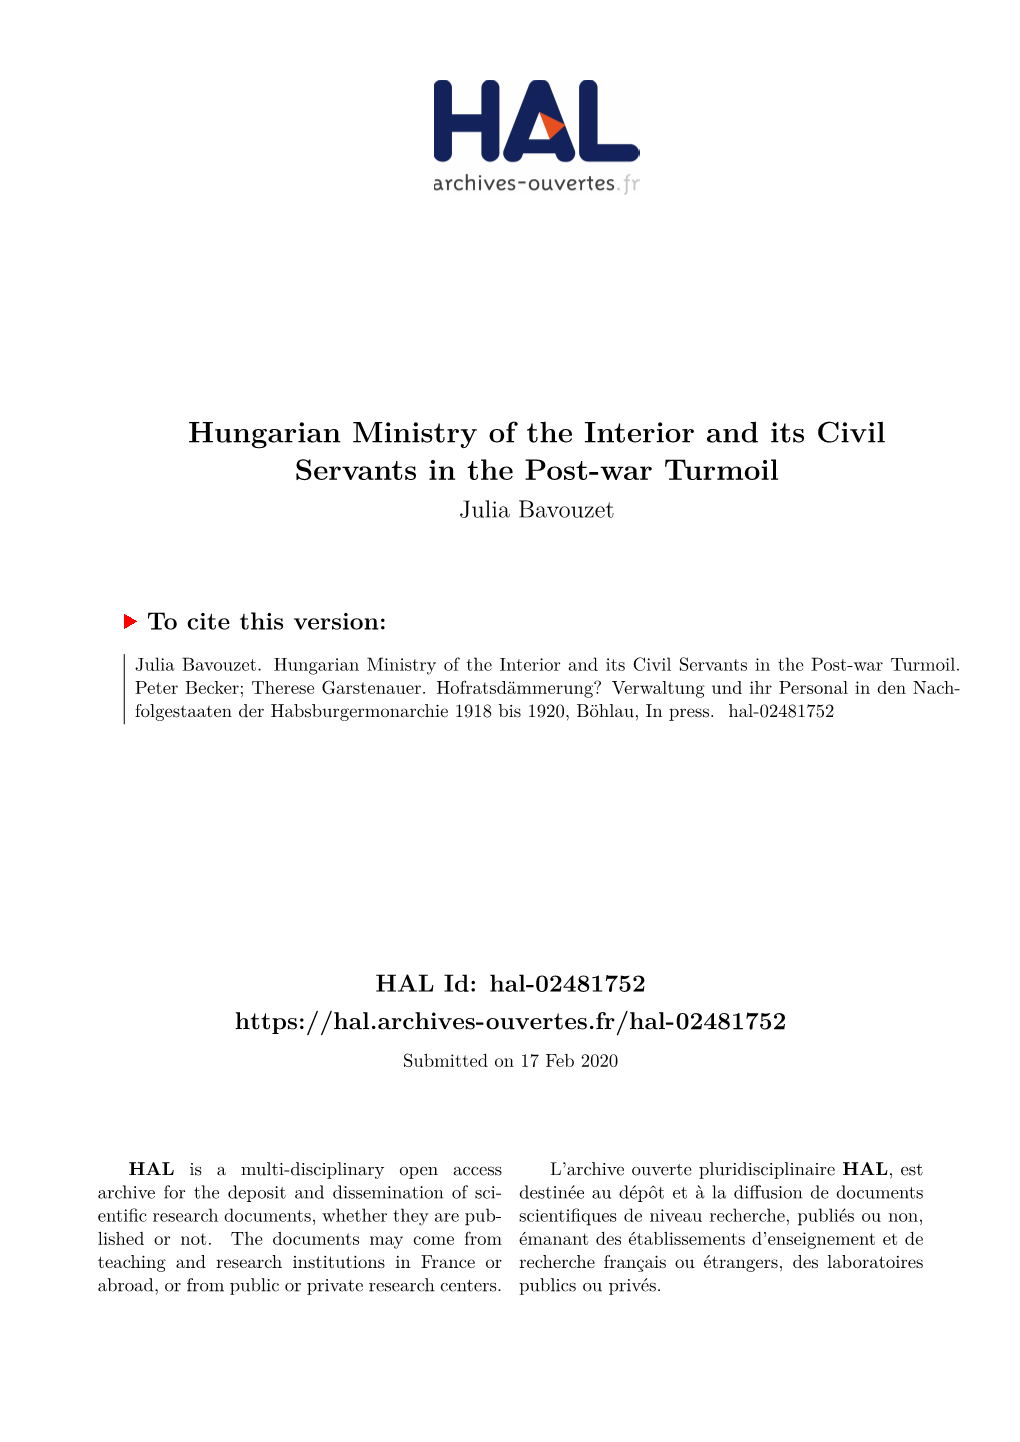 Hungarian Ministry of the Interior and Its Civil Servants in the Post-War Turmoil Julia Bavouzet